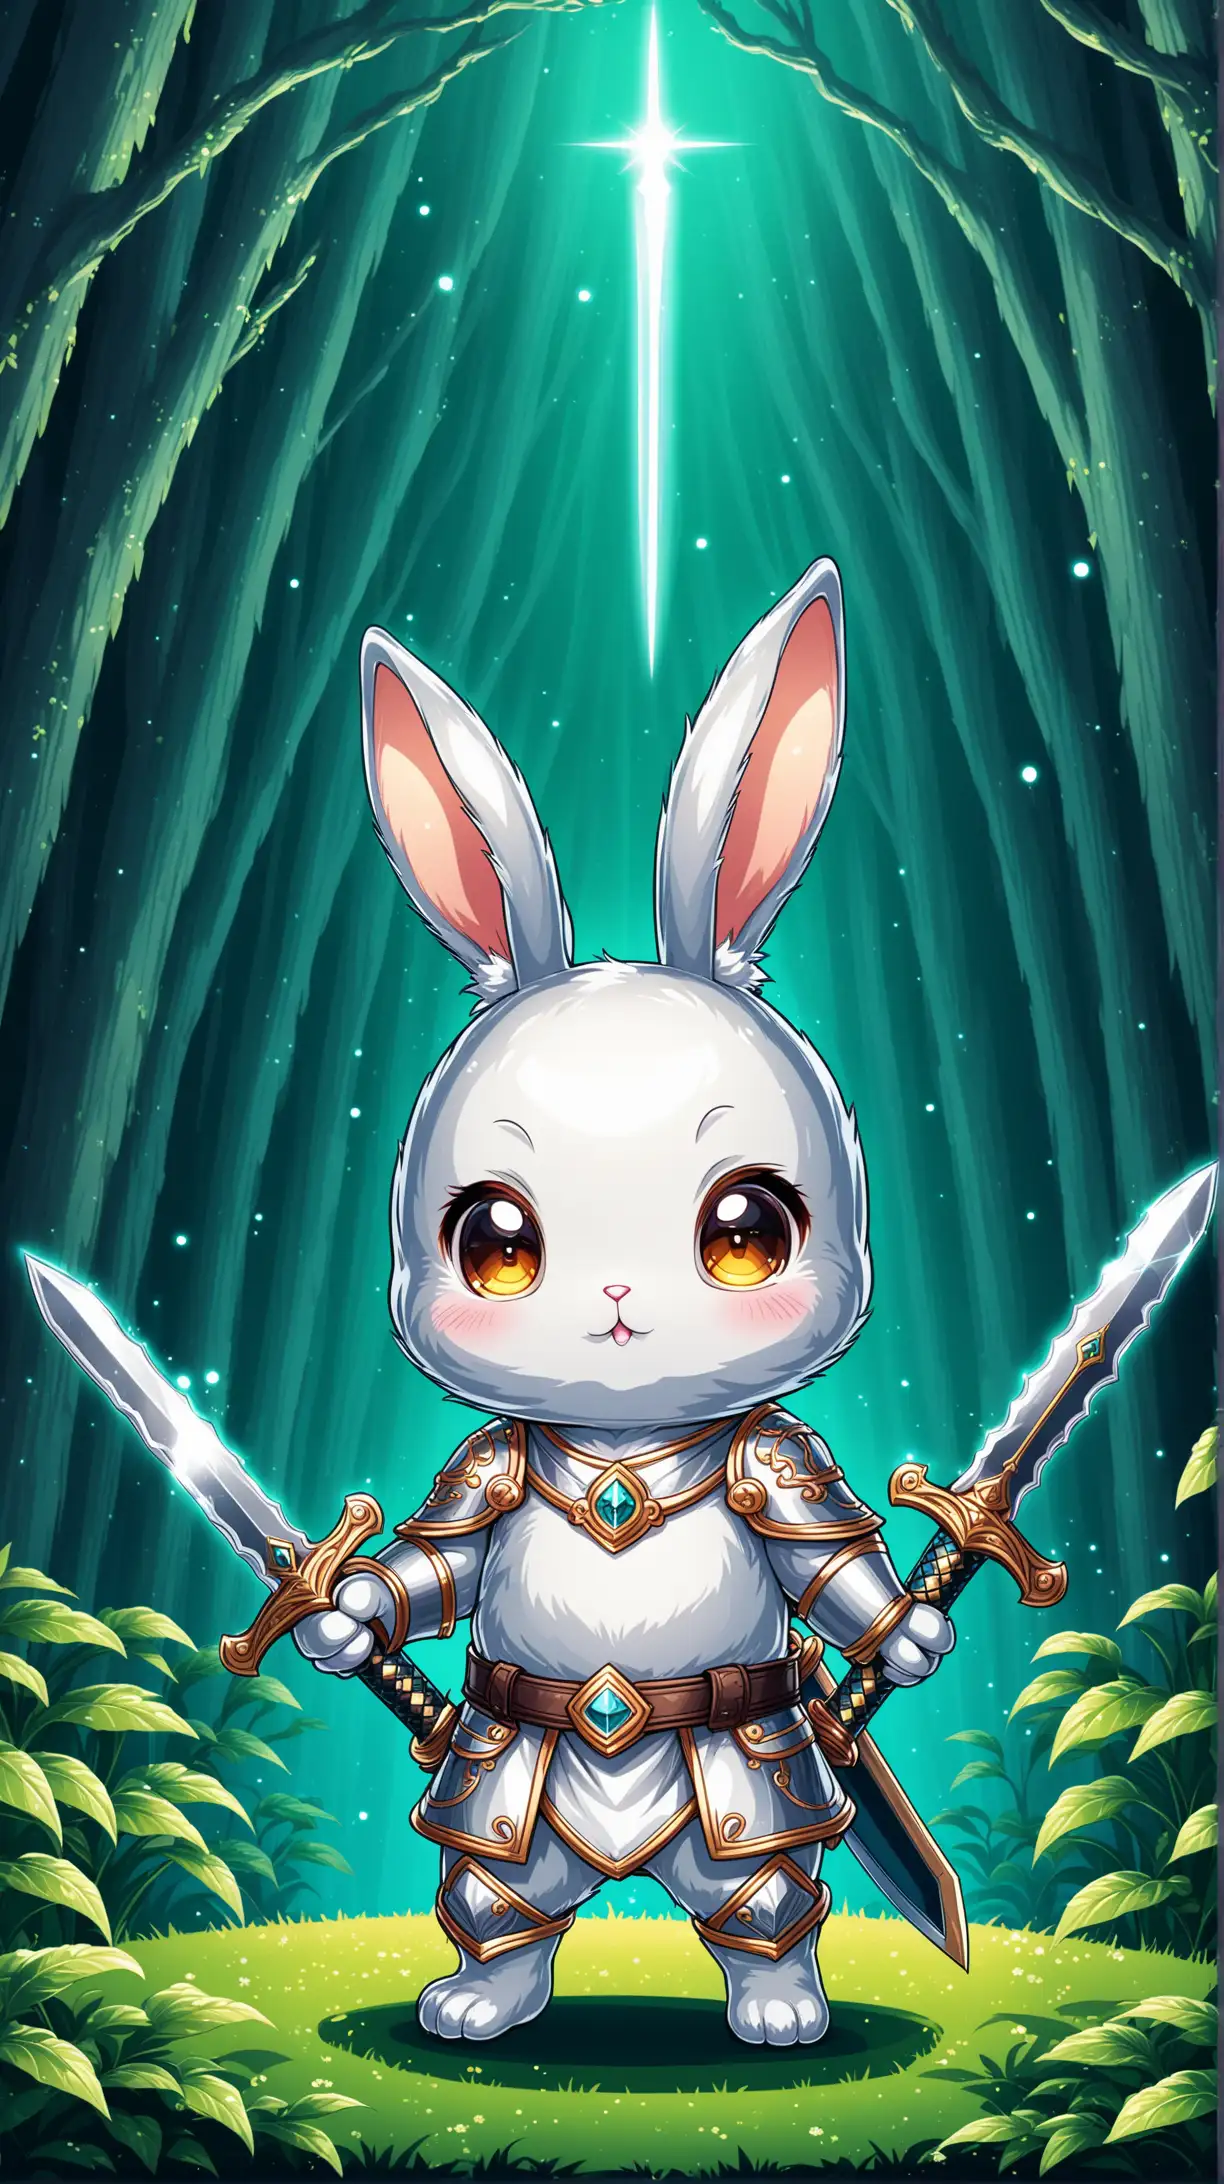 Silver SwordWielding Rabbit Cartoon Character in Mysterious Setting